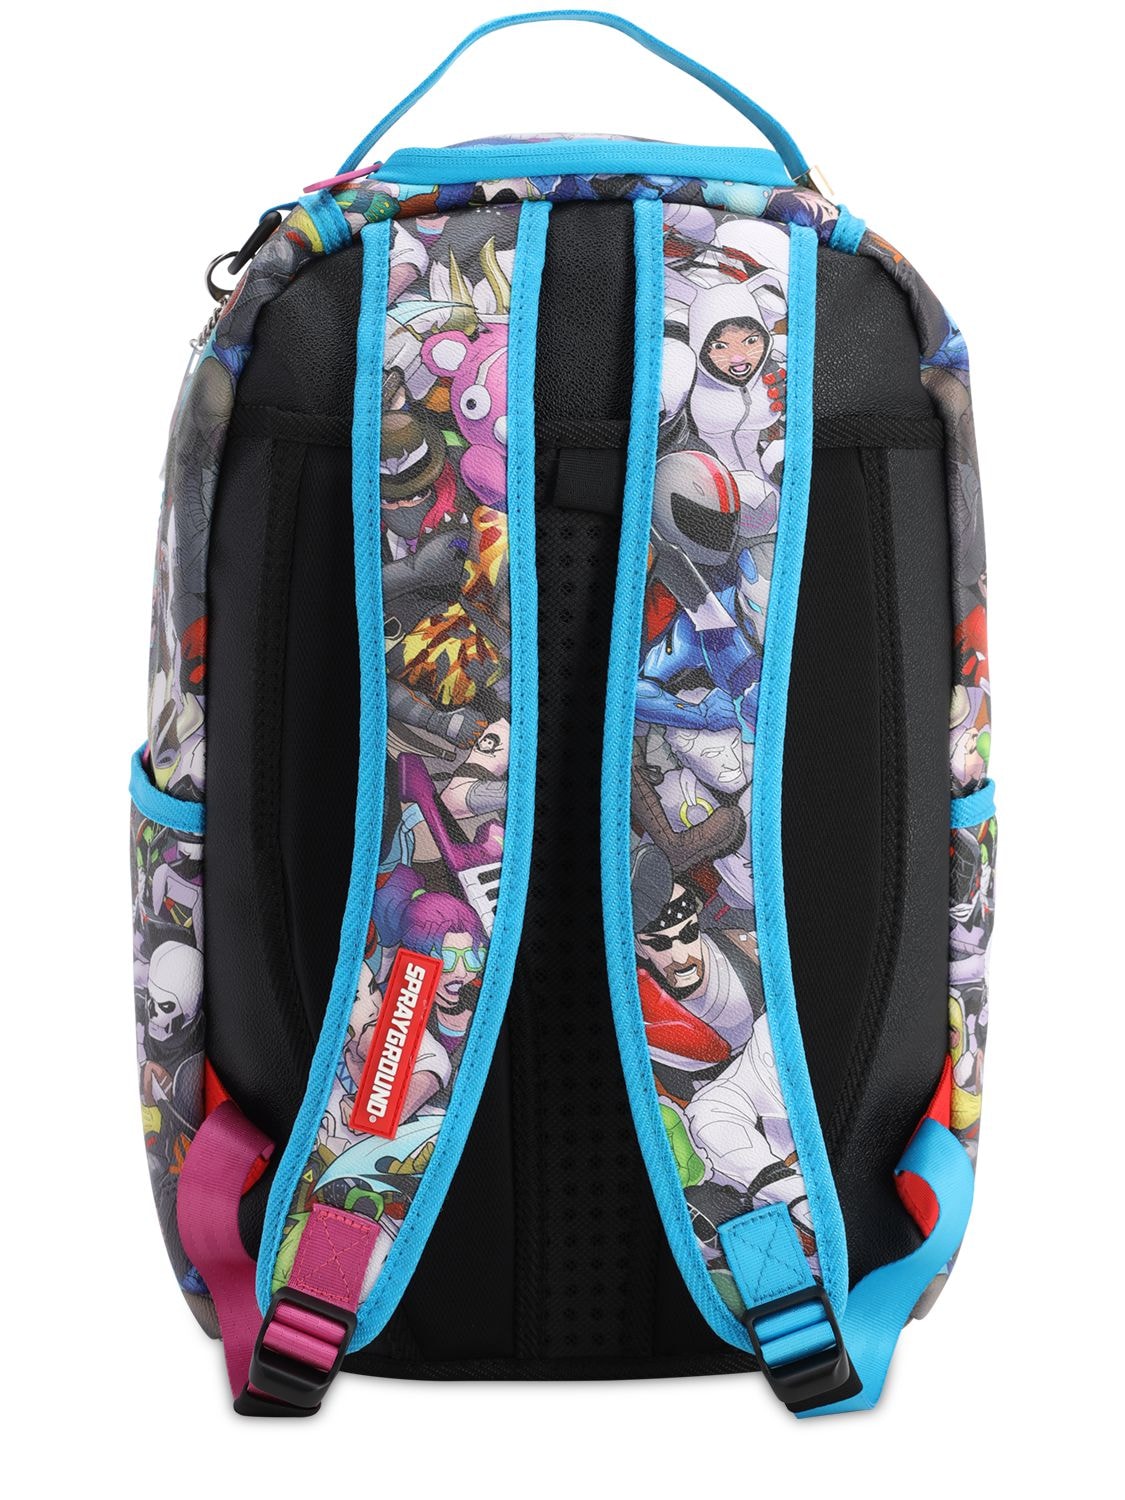 Sprayground Fortnite 100 Dlx Backpack In Multicolor | ModeSens